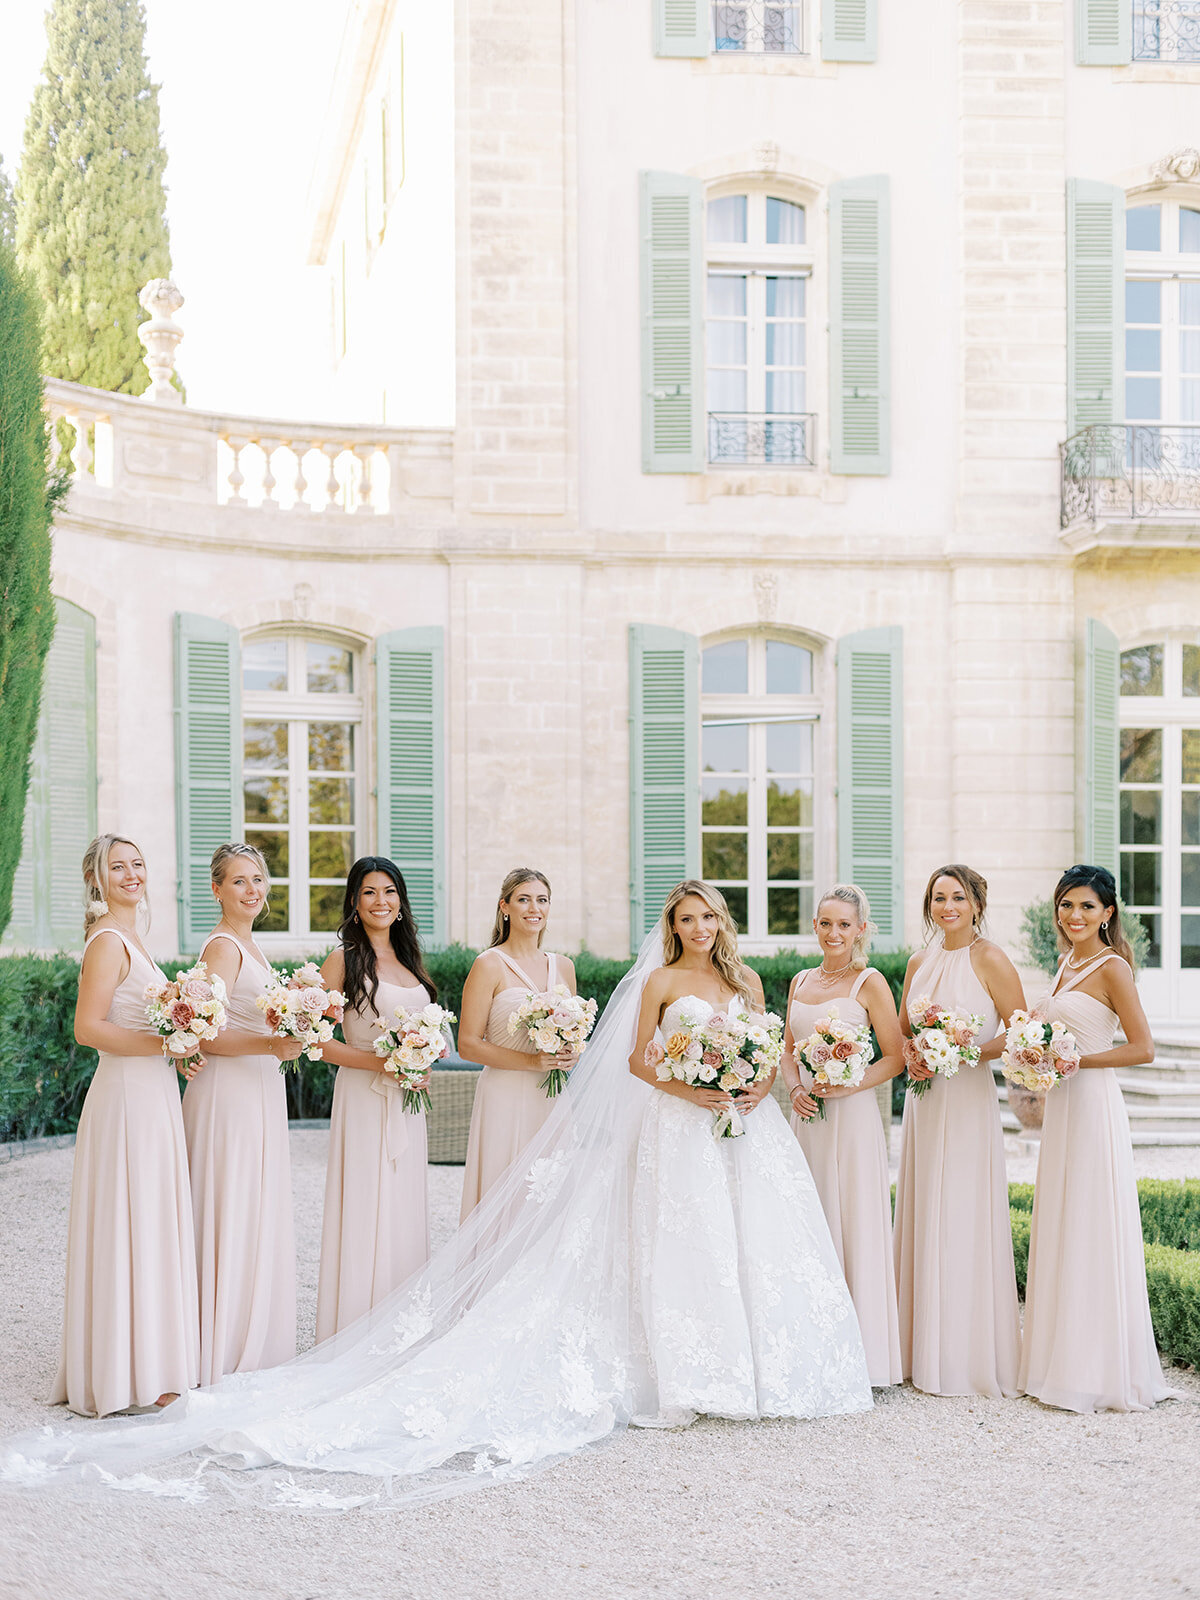 Chateau-de-Tourreau-France-wedding-by-Julia-Kaptelova_Photography-0410